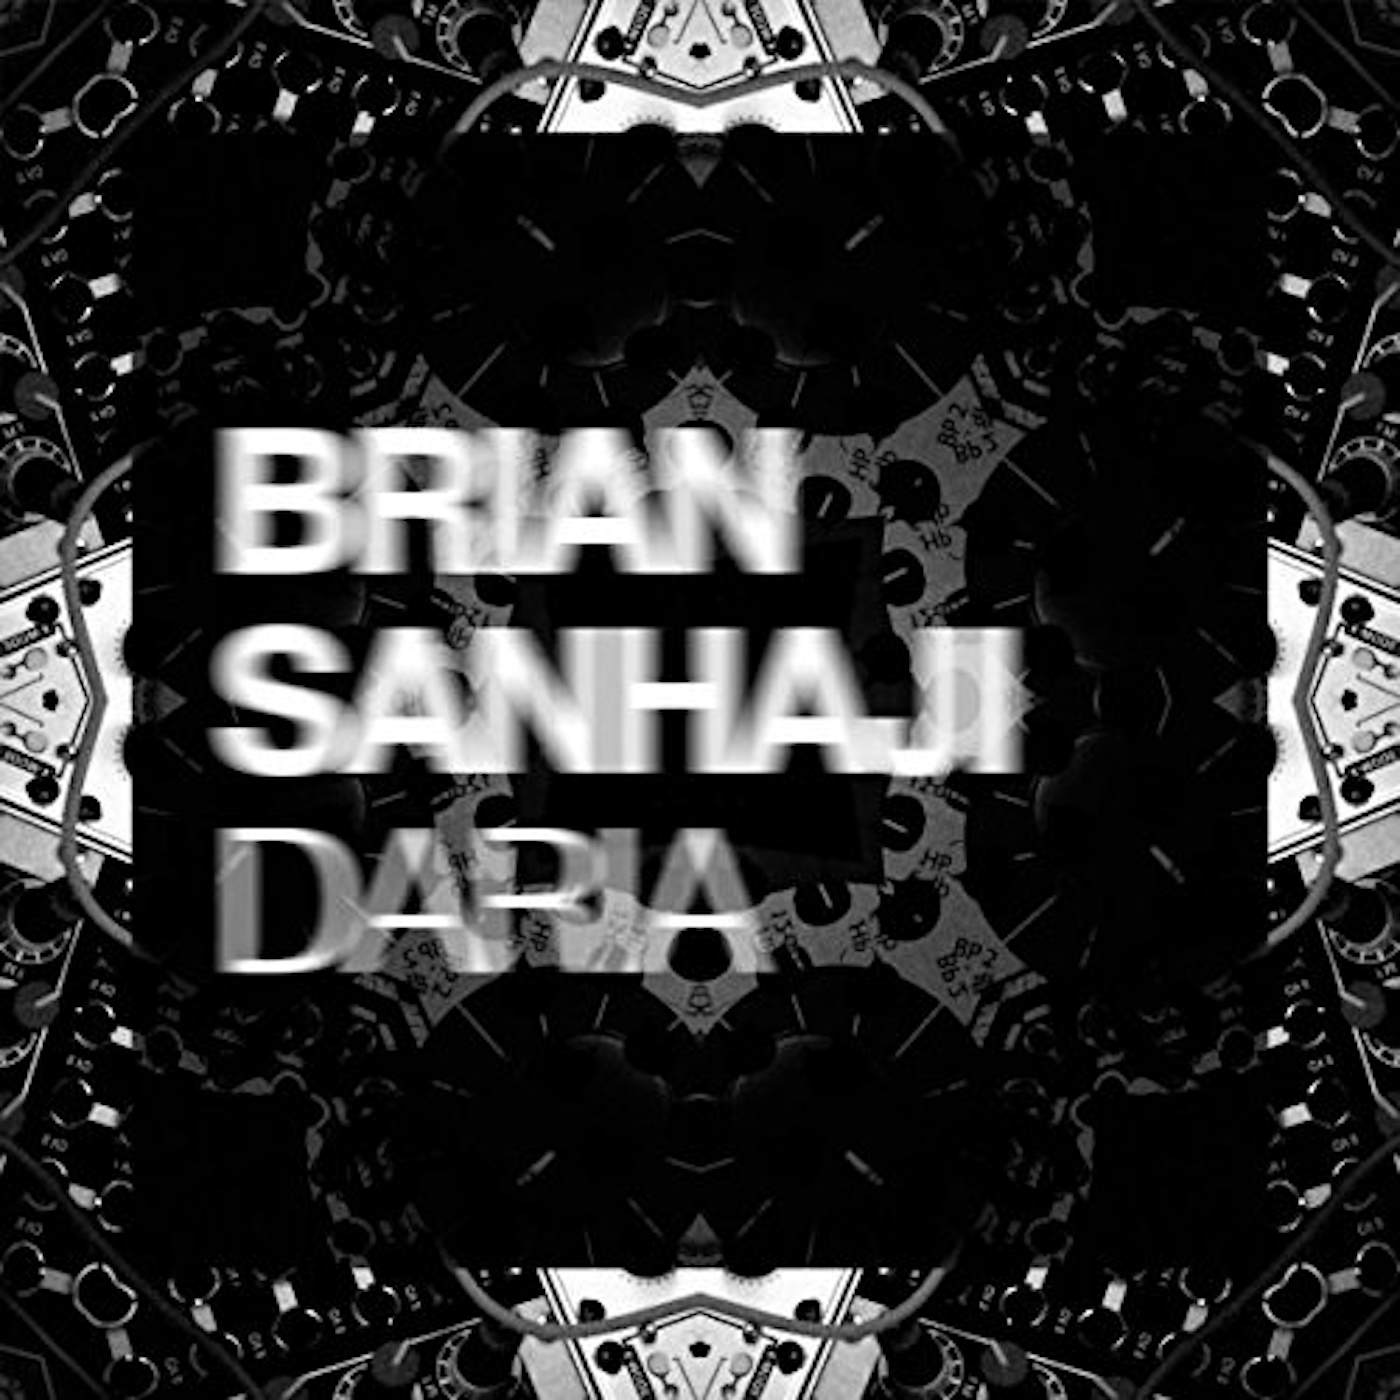 Brian Sanhaji Daria Vinyl Record